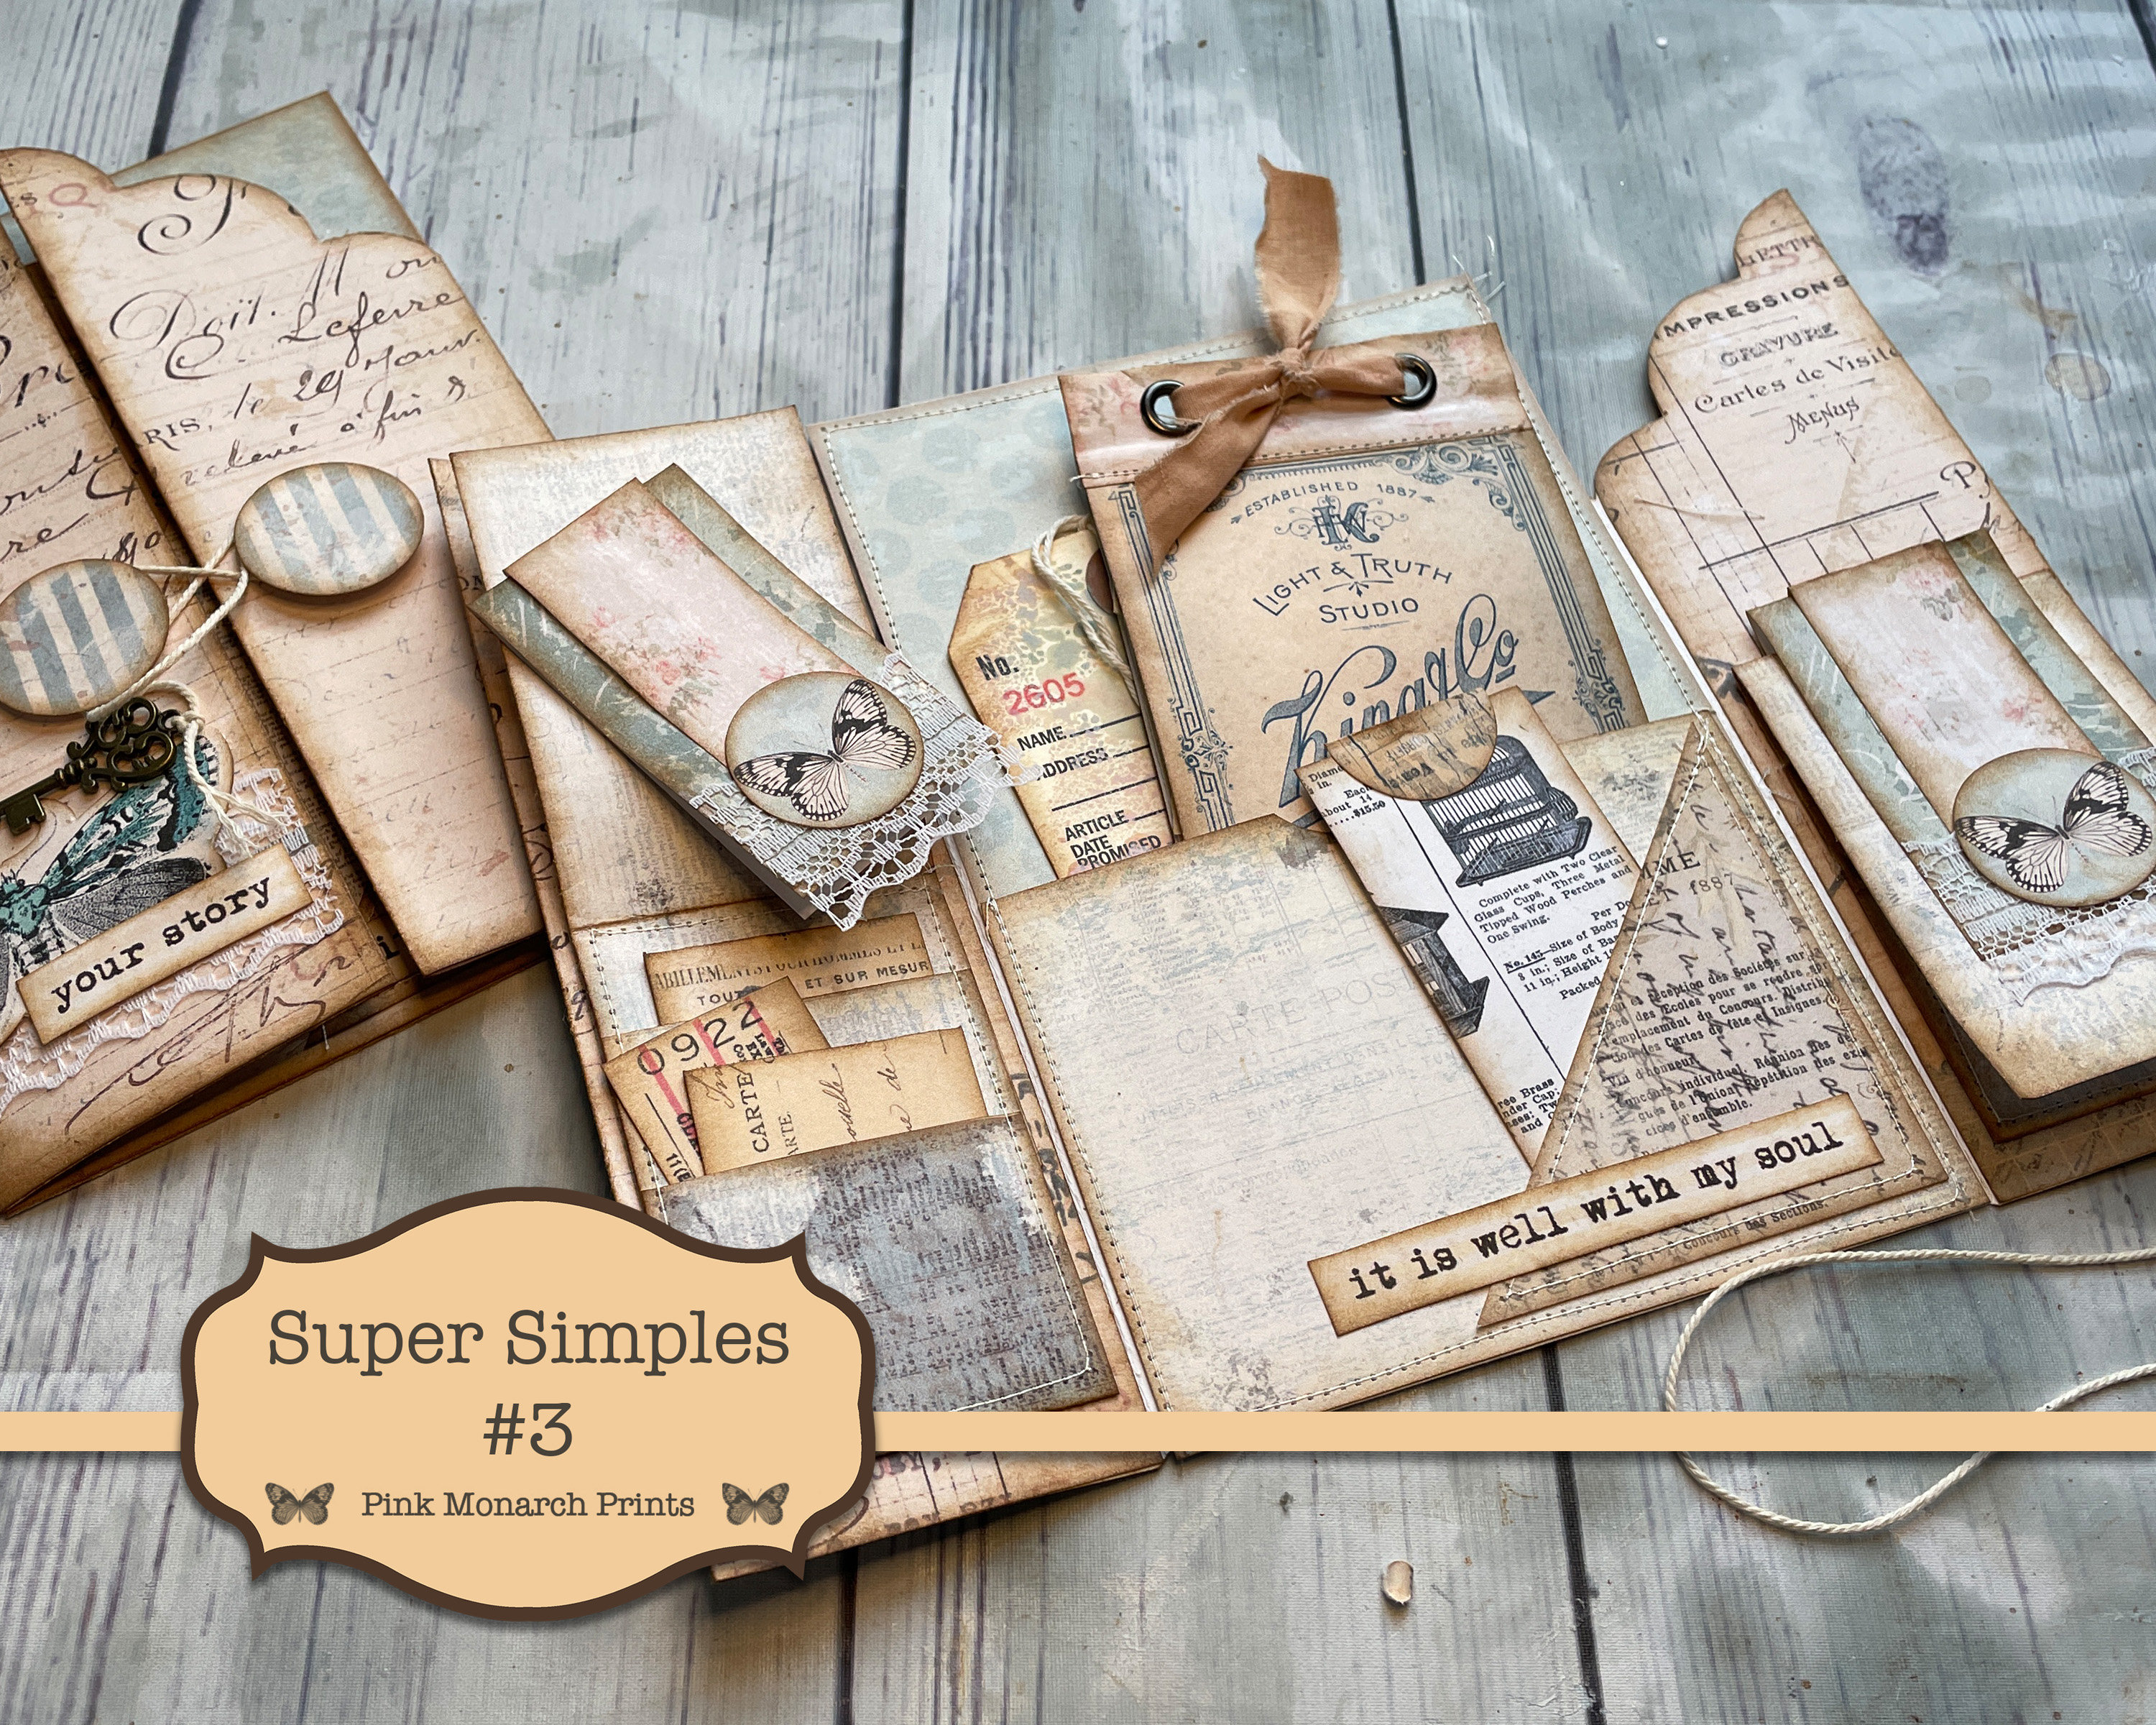 Super Simples 9, Junk Journal Kit, Digital Junk Journal, Junk